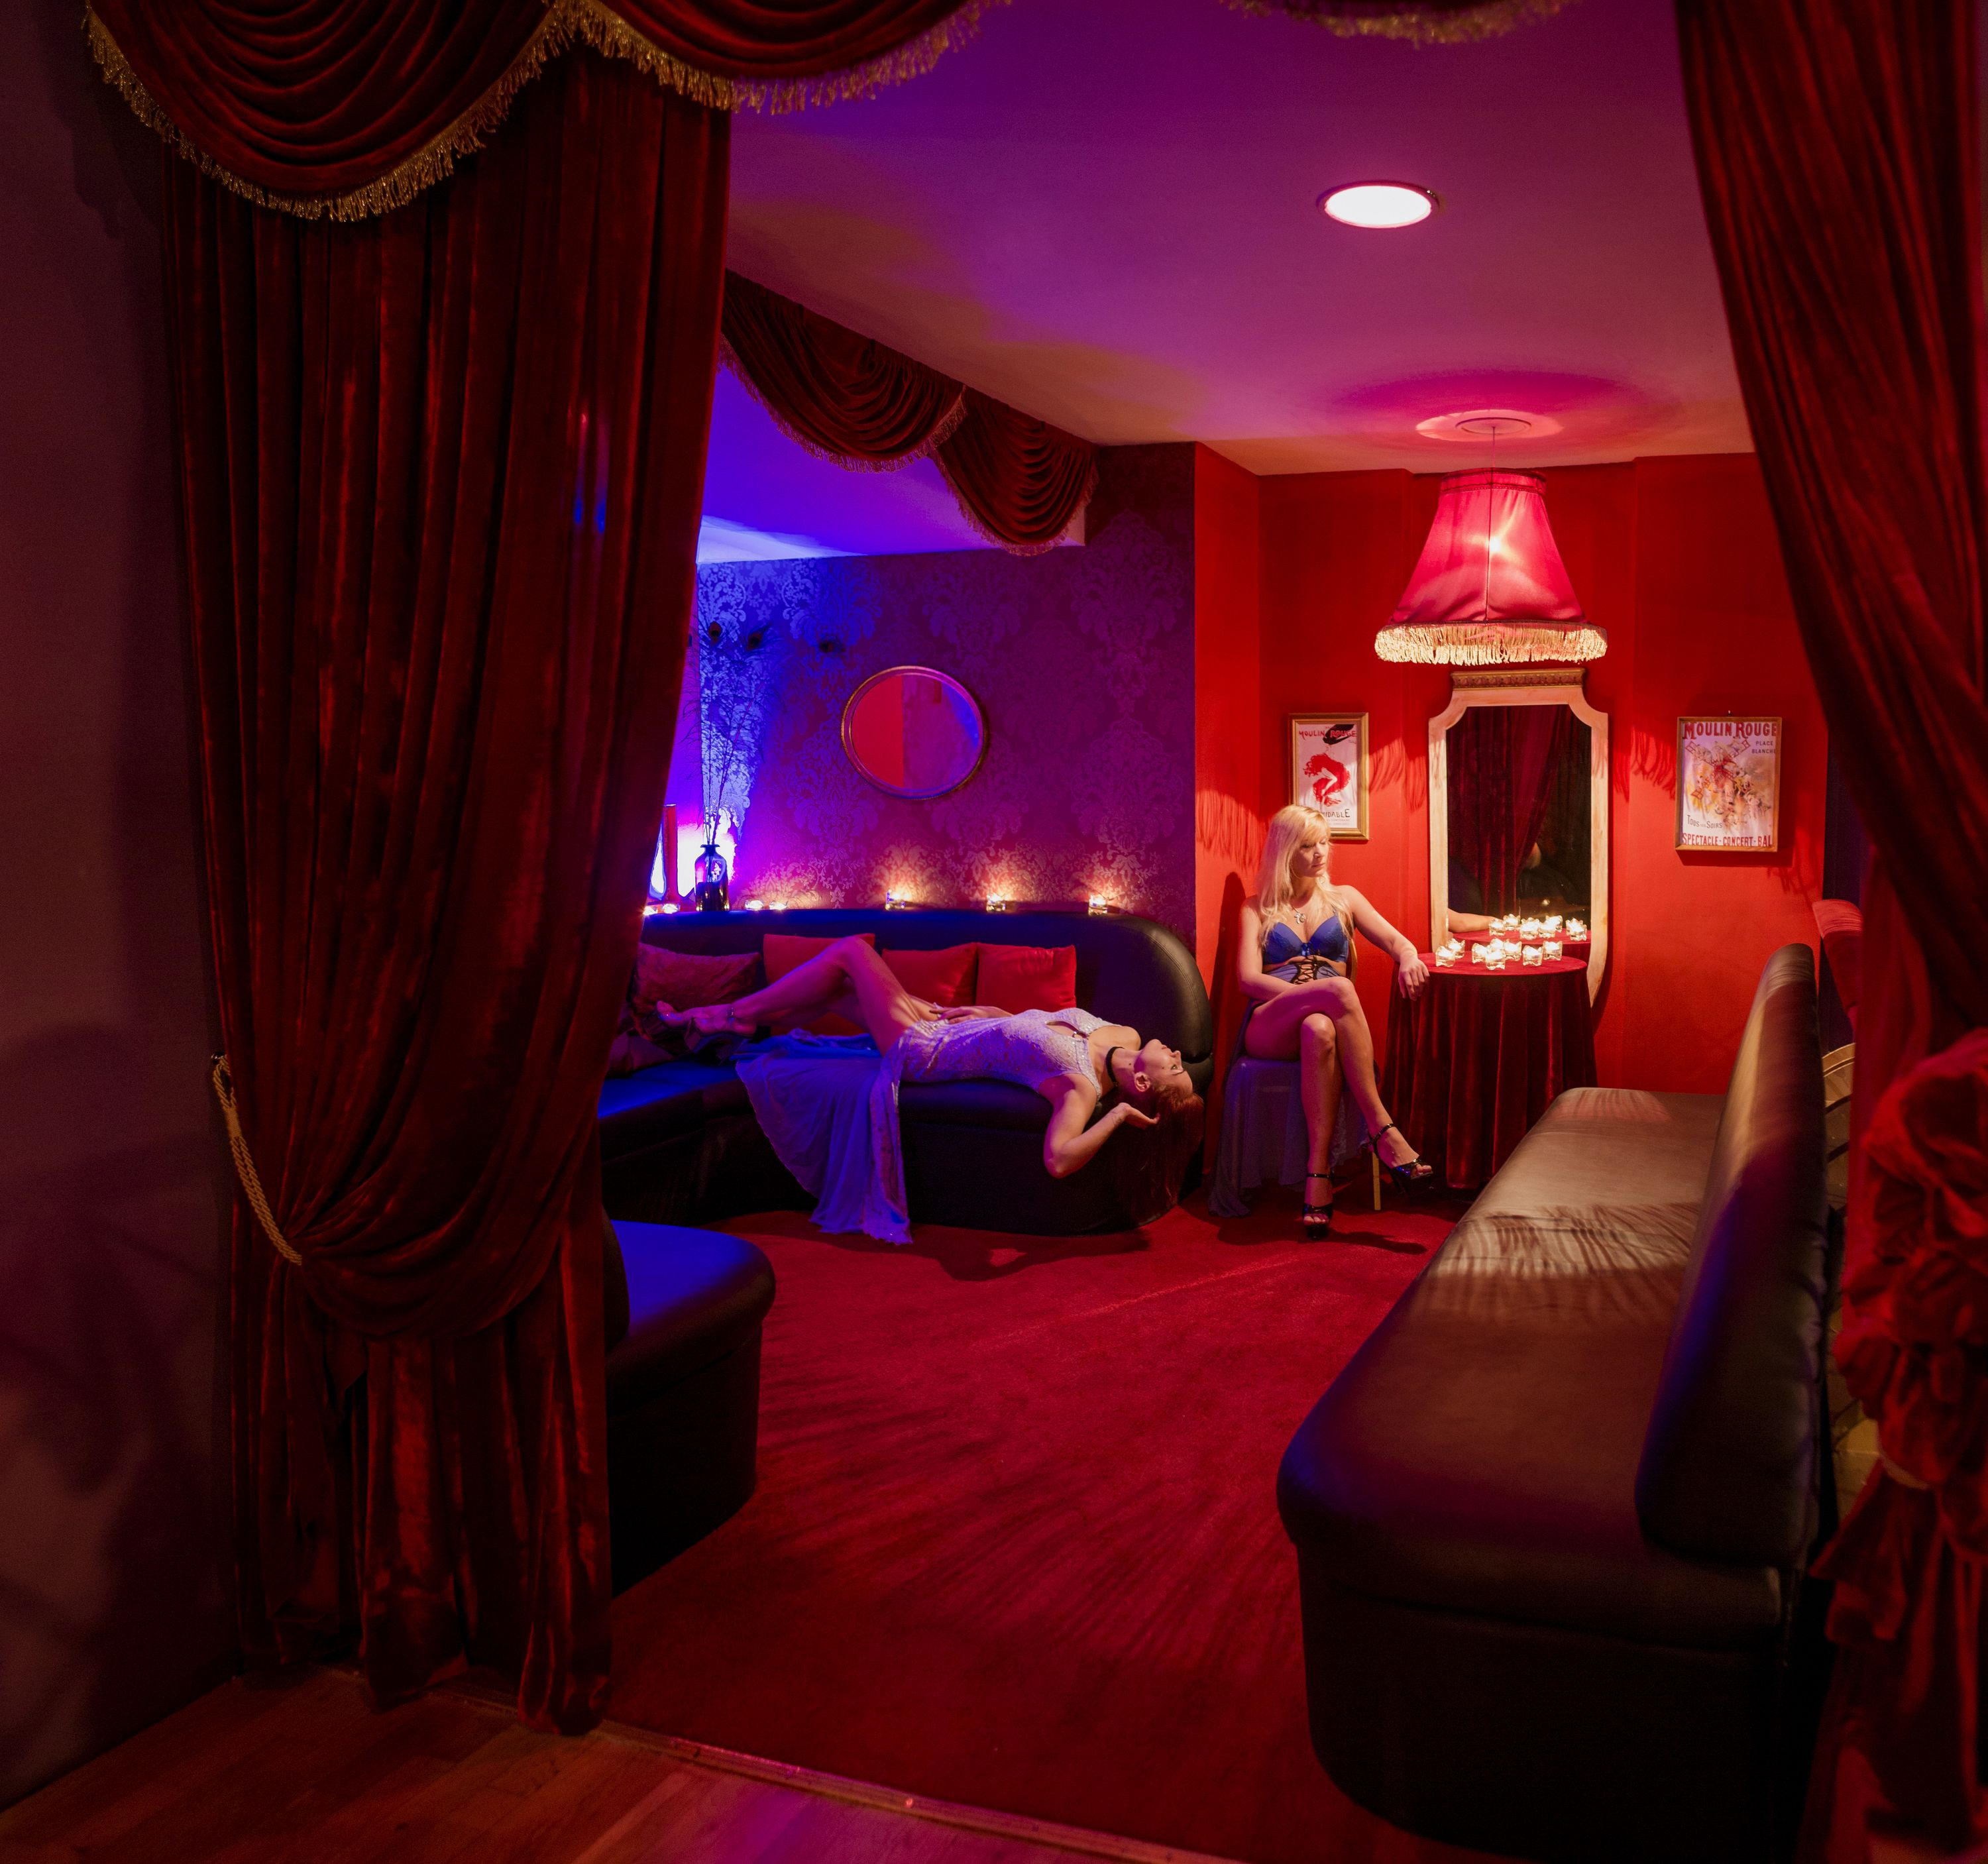 aravindan ramalingam recommends vip strip club room pic